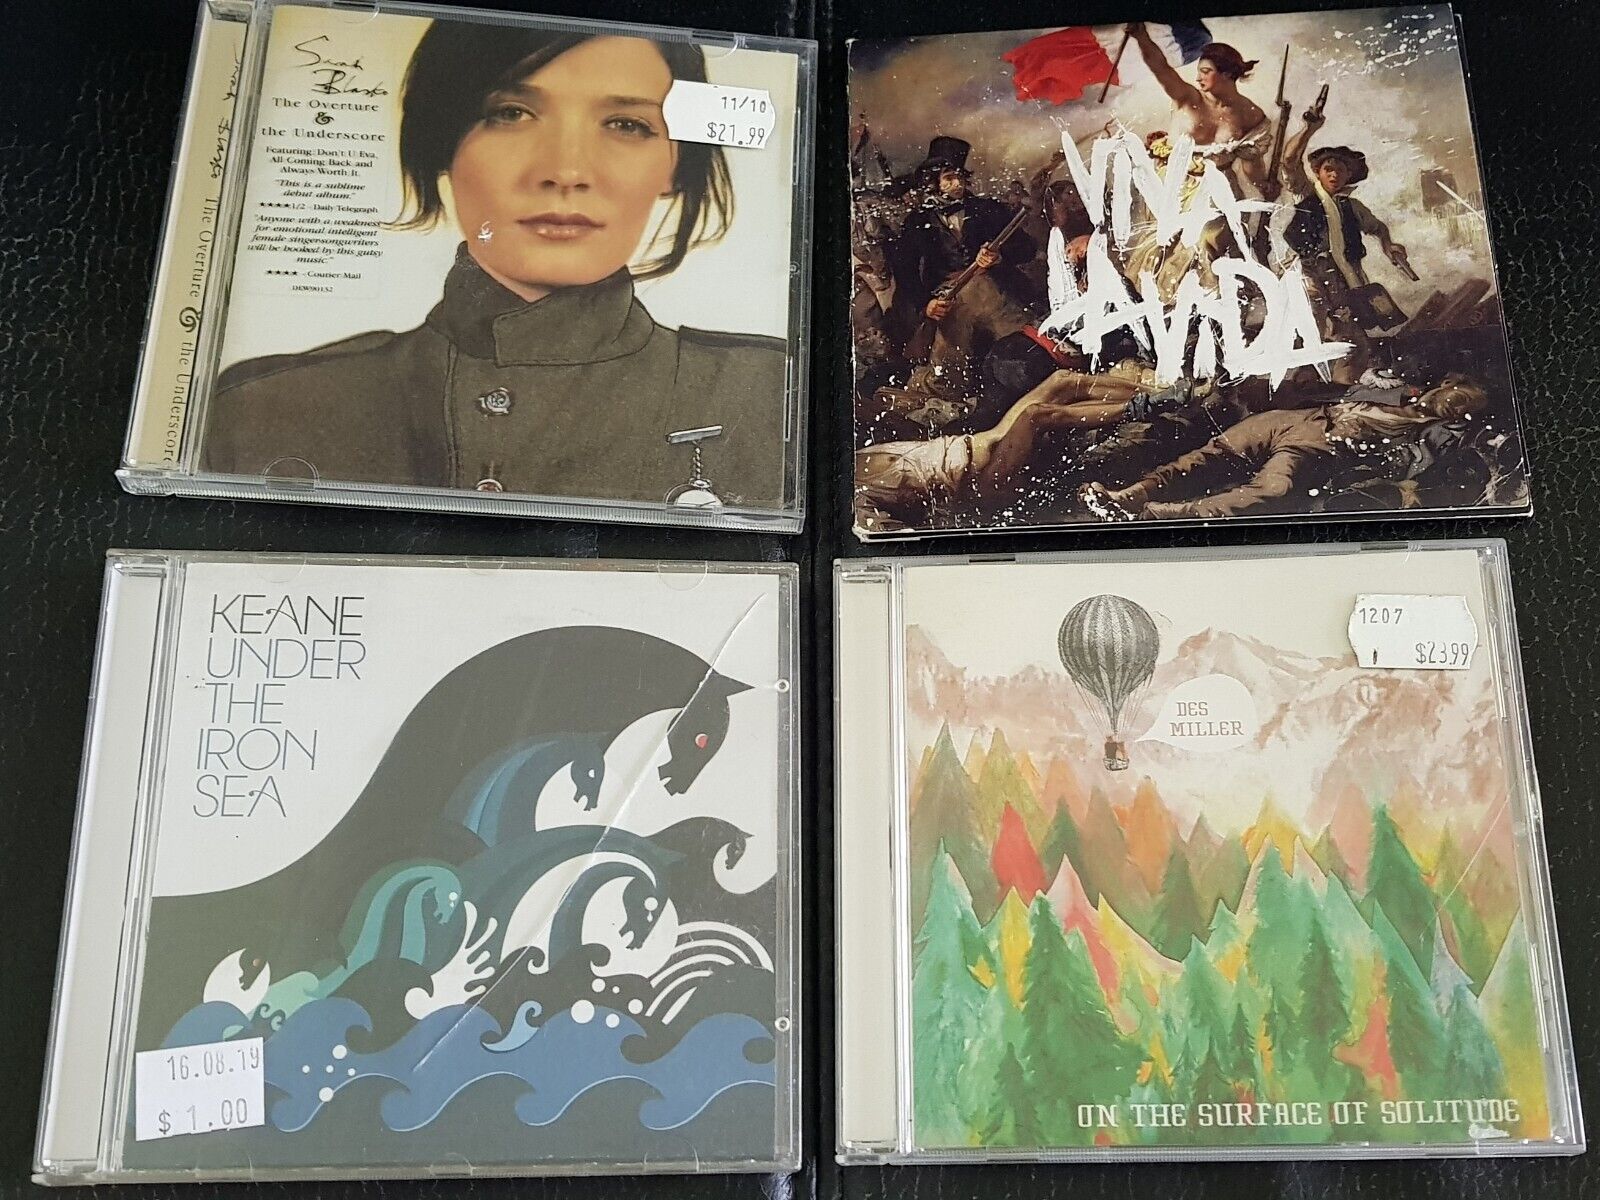 4 x CDs: Sarah Blasko, Coldplay - Viva, Keane - Under The Iron Sea, Des Miller